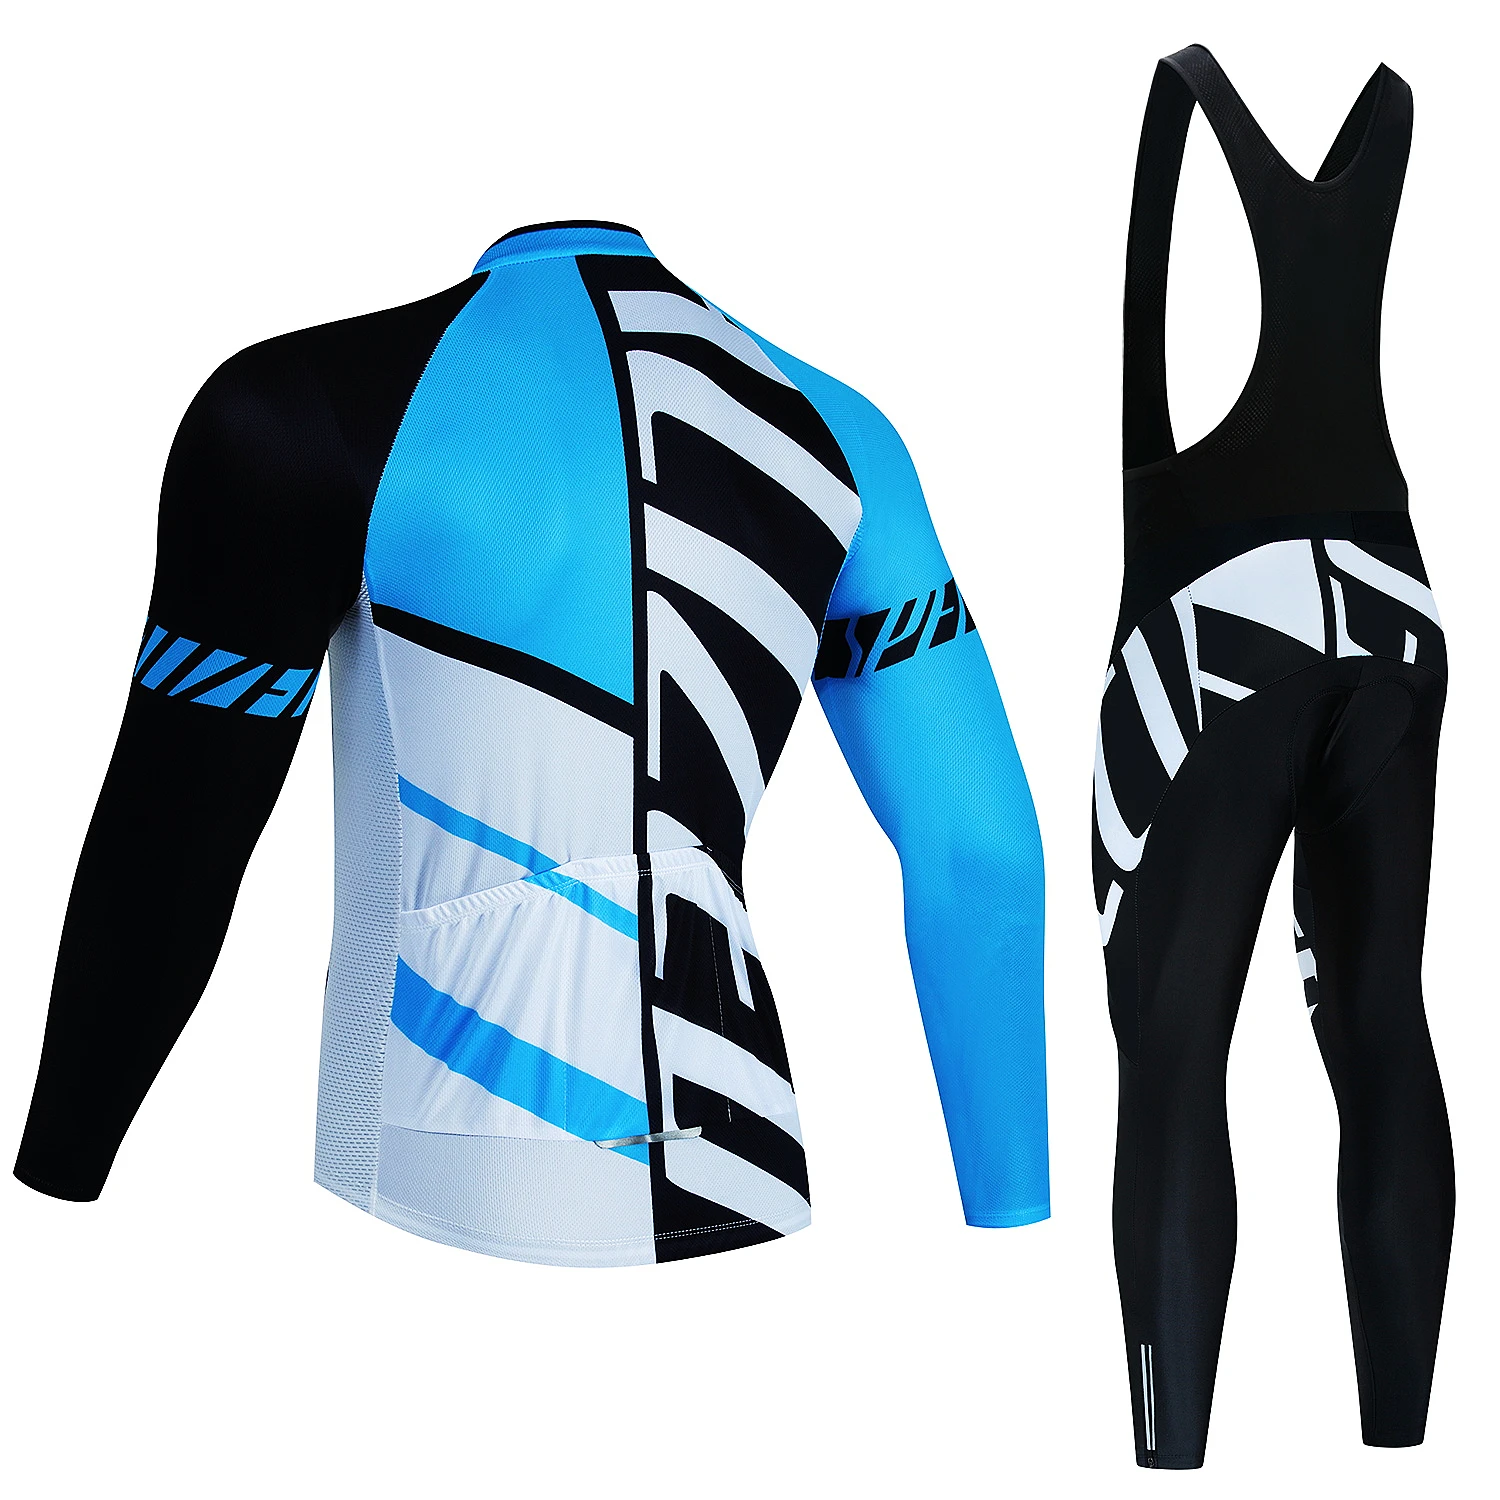 022 men s winter thermal fleece cycling a sets maillot ropa ciclismo keep warm mtb bike thumb200